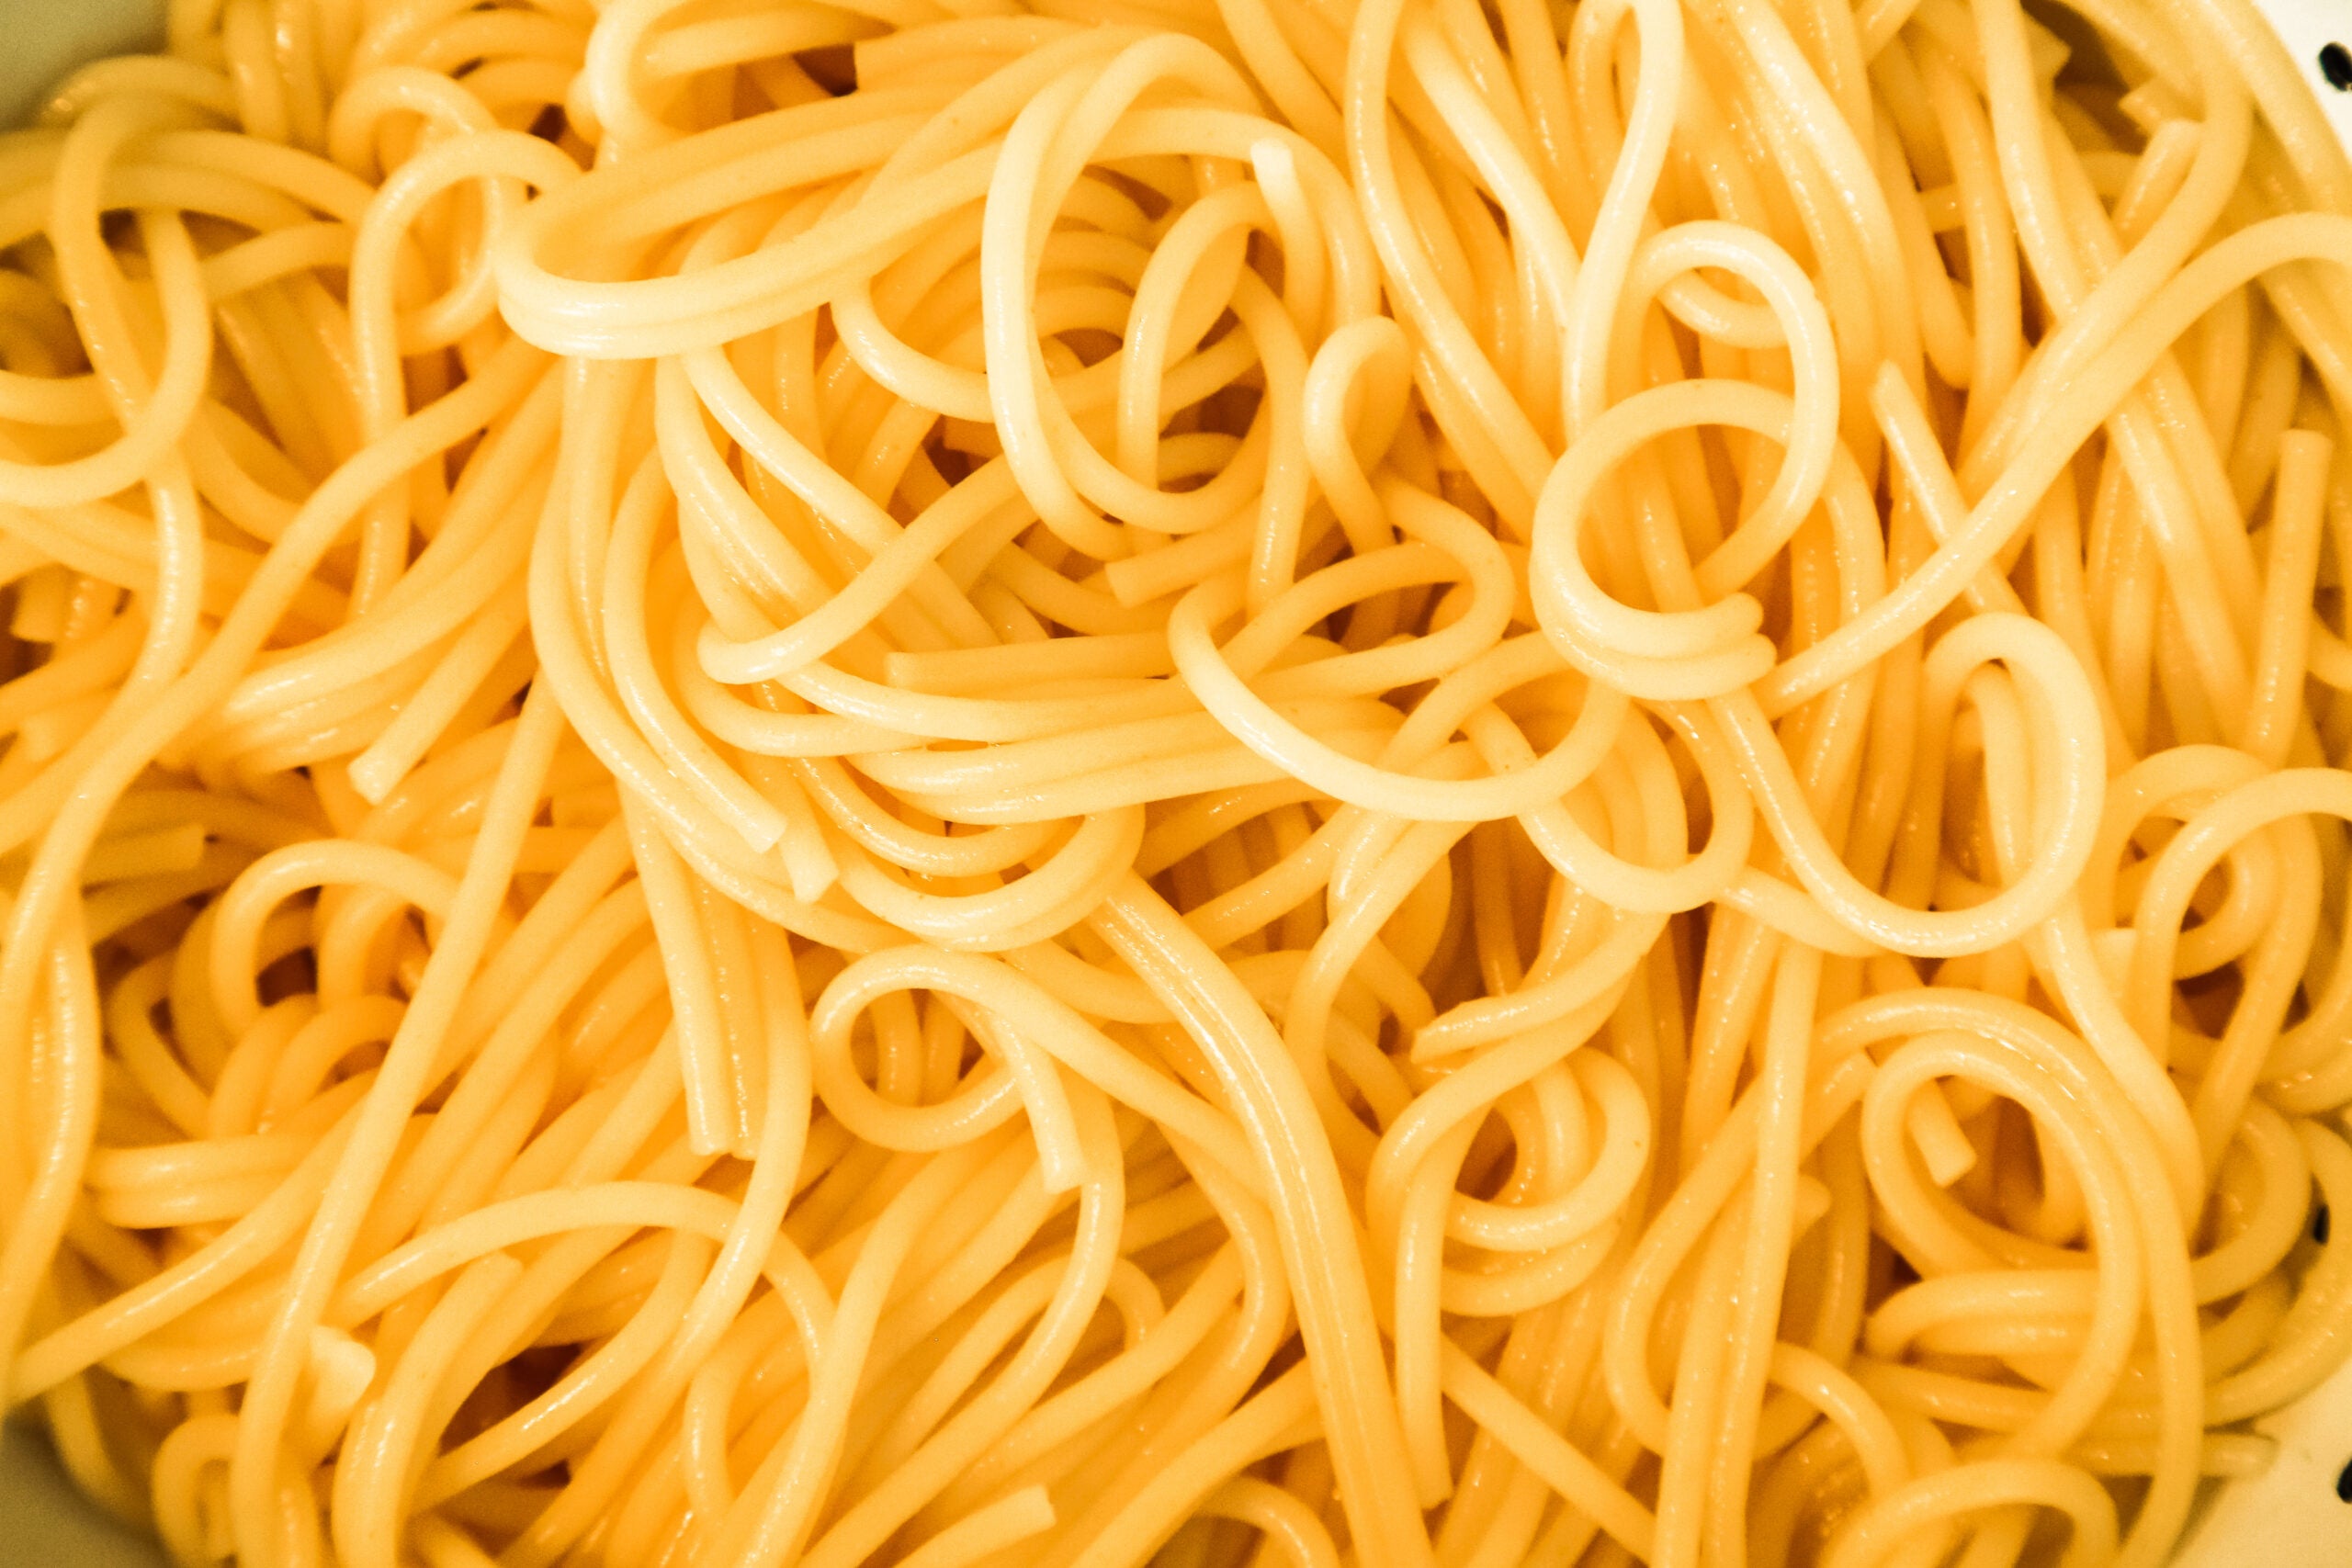 https://www.saveur.com/uploads/2021/08/23/best-pasta-makers-saveur-scaled.jpg?auto=webp